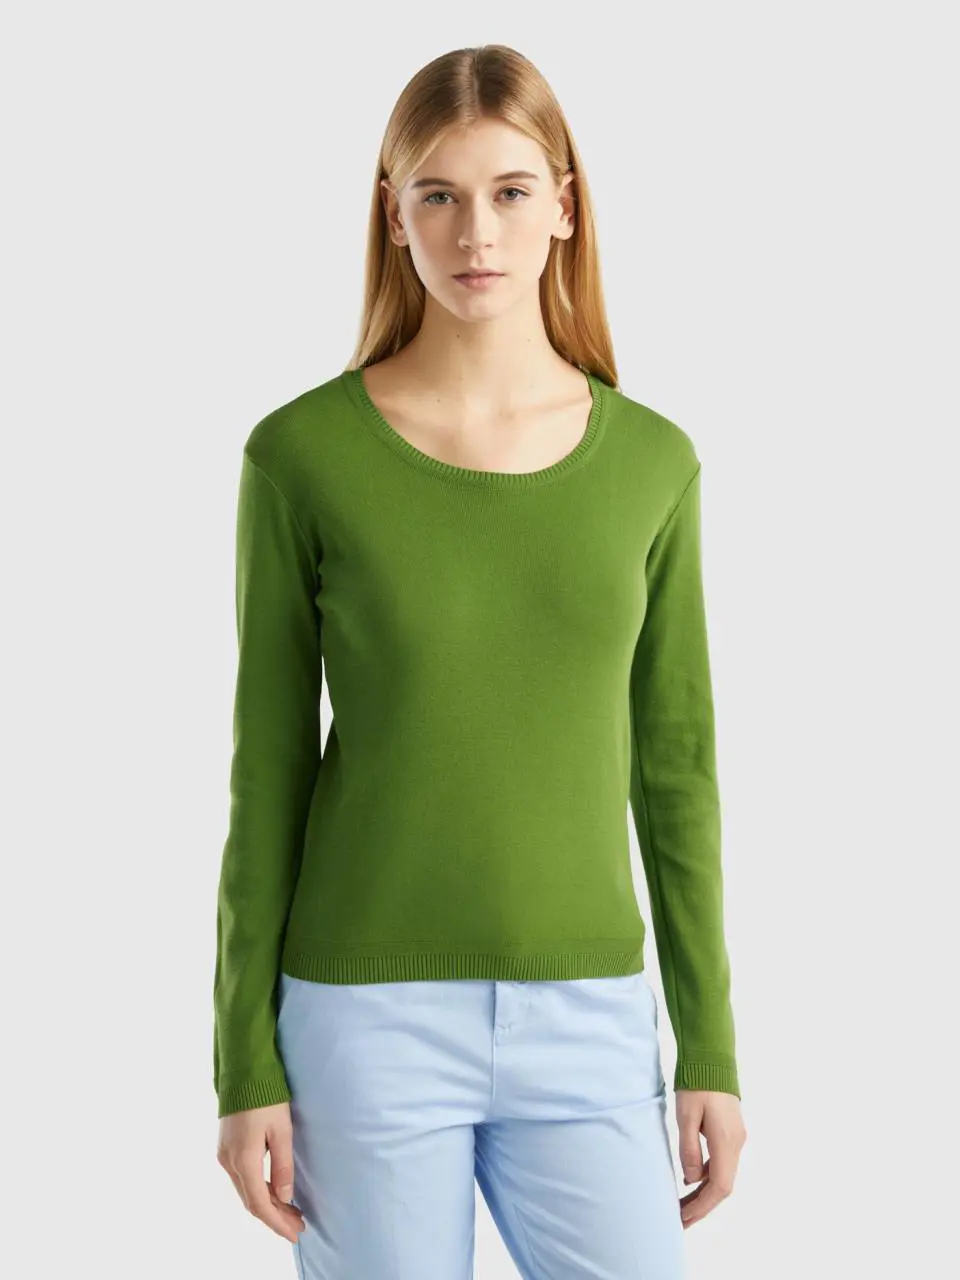 Benetton crew neck sweater in pure cotton. 1